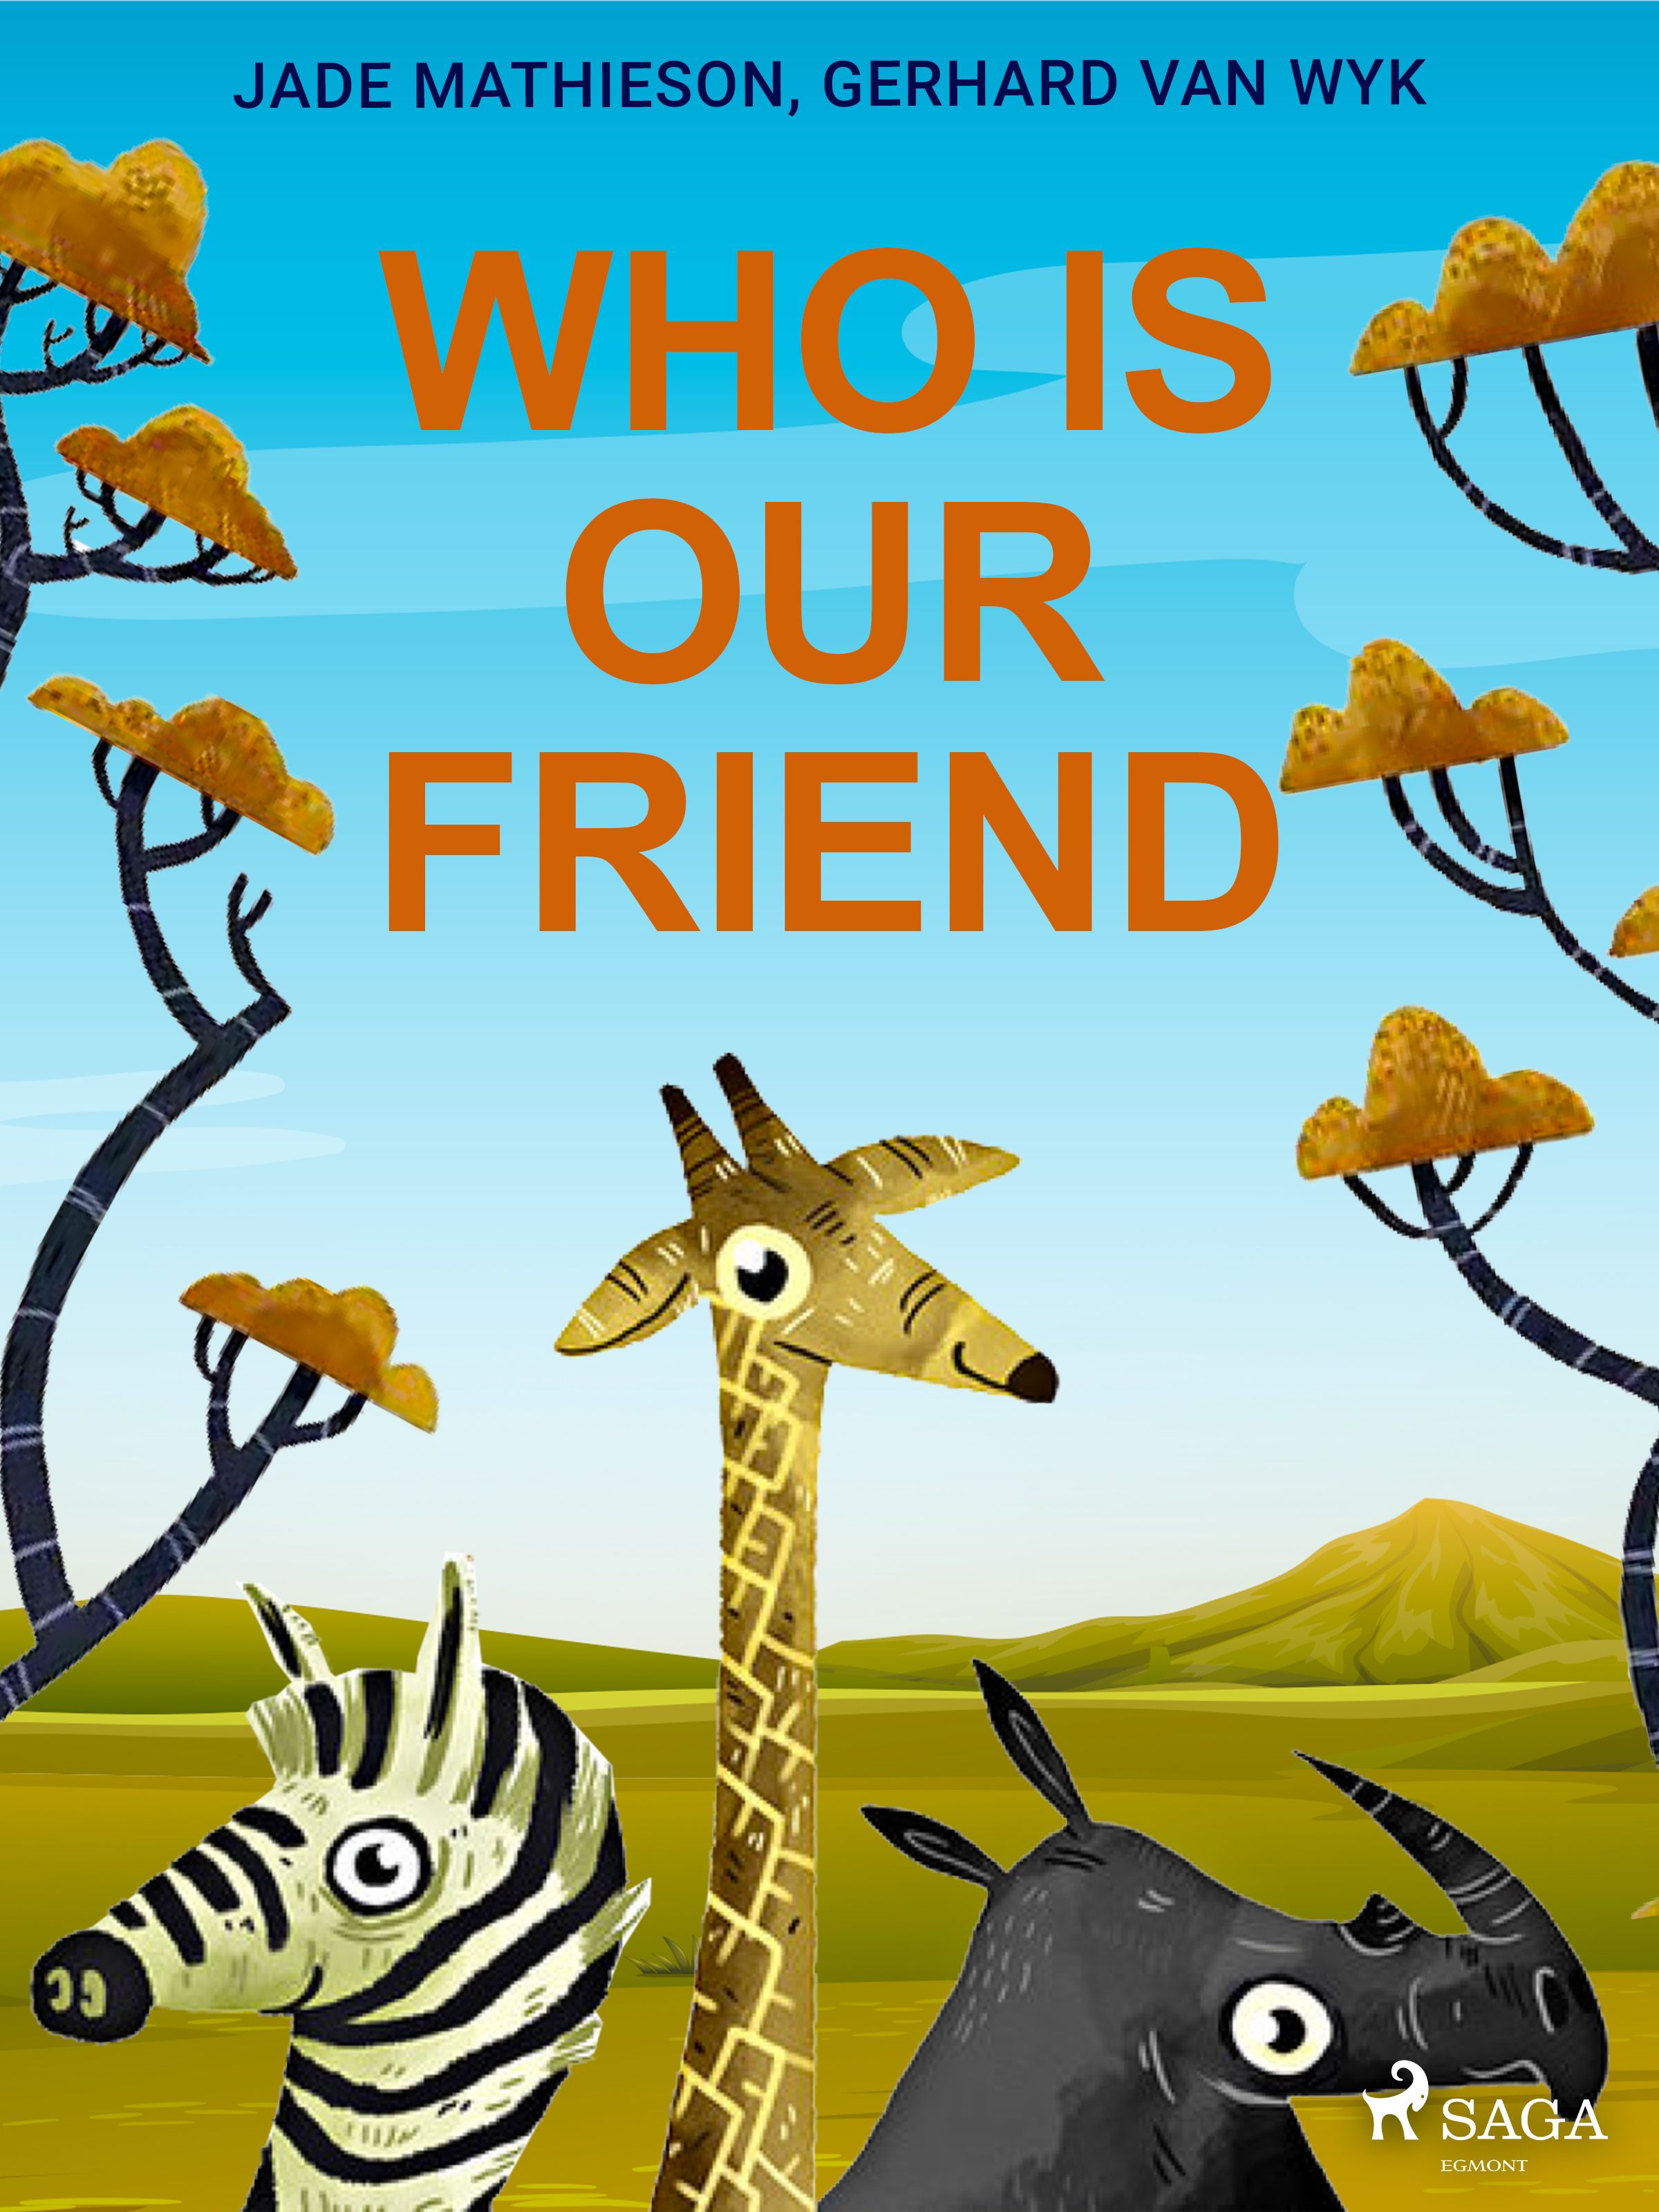 Who is Our Friend, e-bog af Jade Mathieson, Gerhard Van Wyk